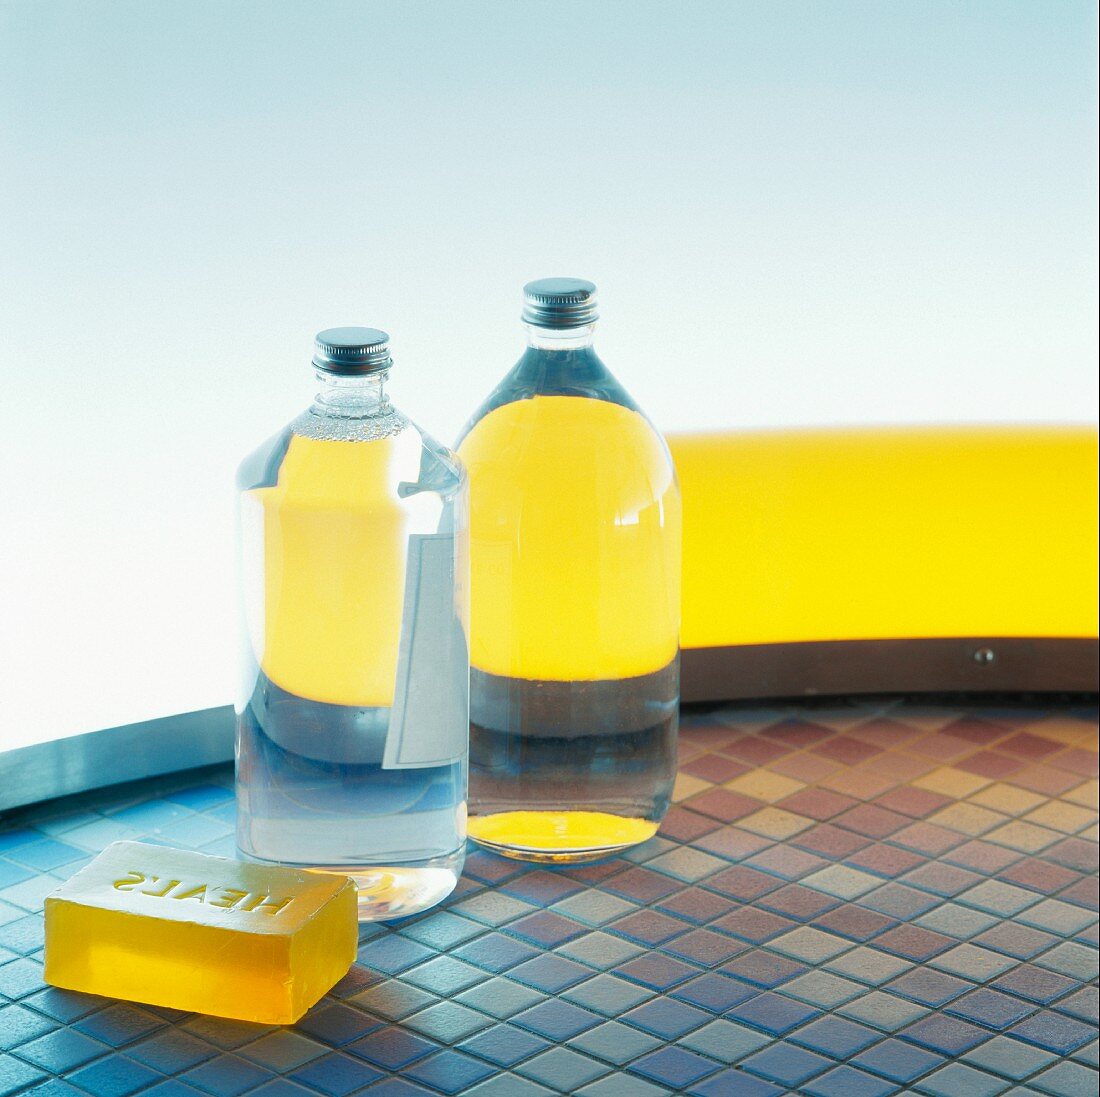 Full bottles and yellow soap on mosaic floor tiles